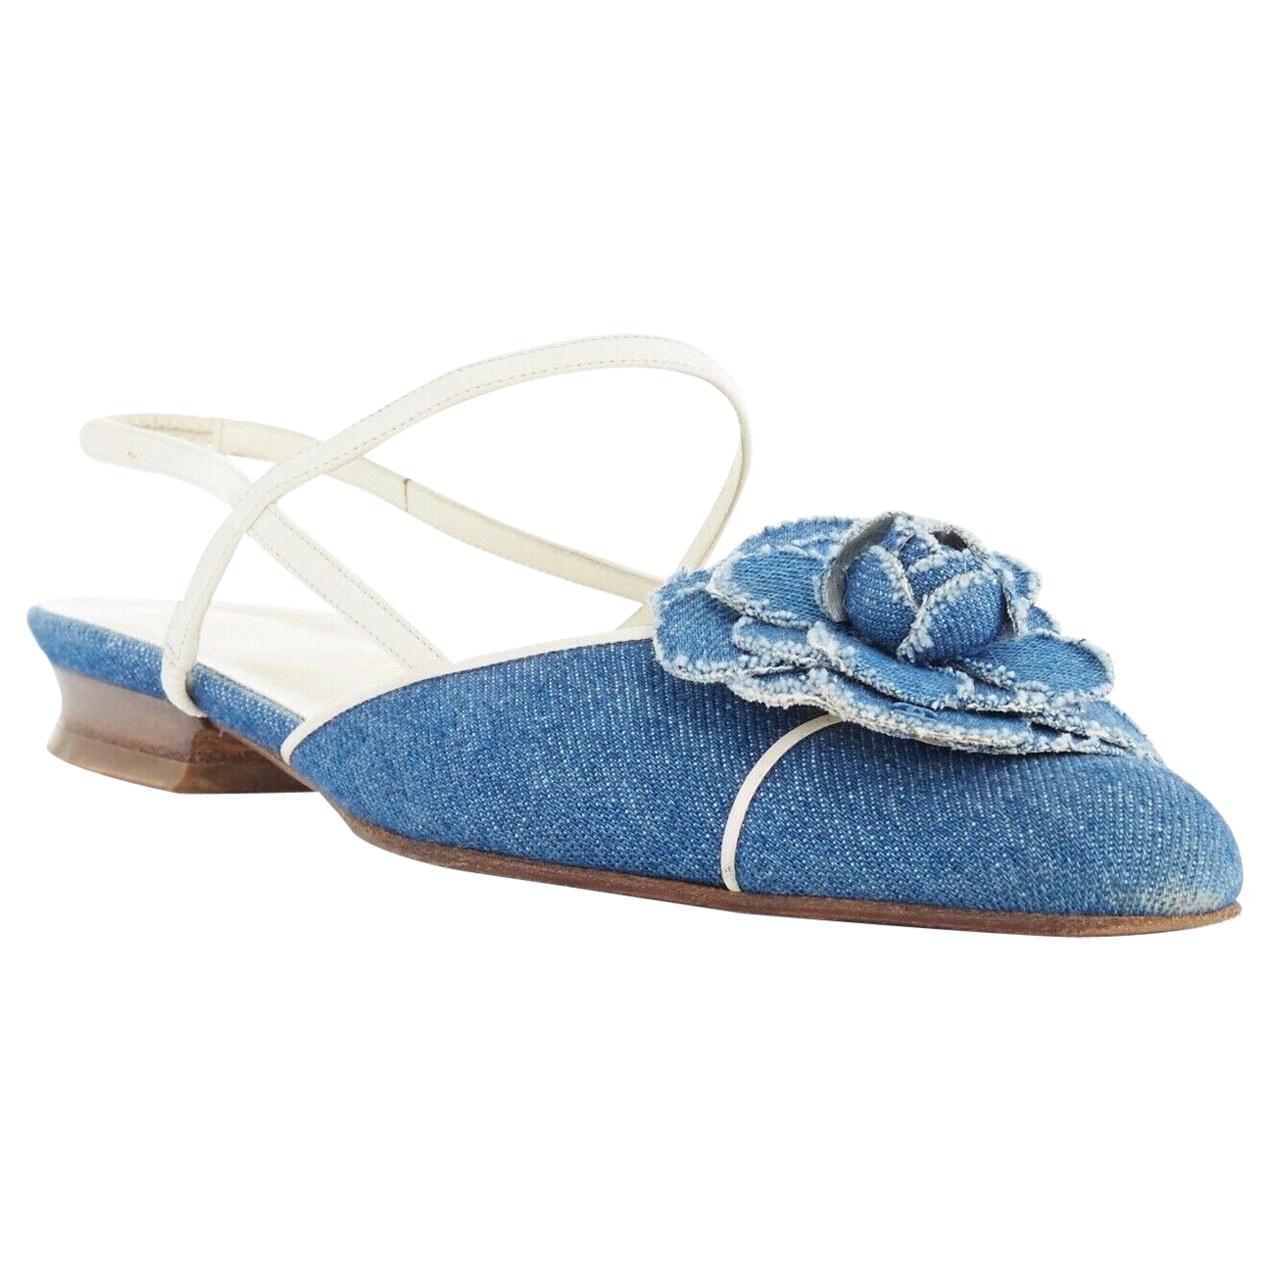 CHANEL blue denim Camellia CC sling back almond toe flats shoes EU37.5 US7.5